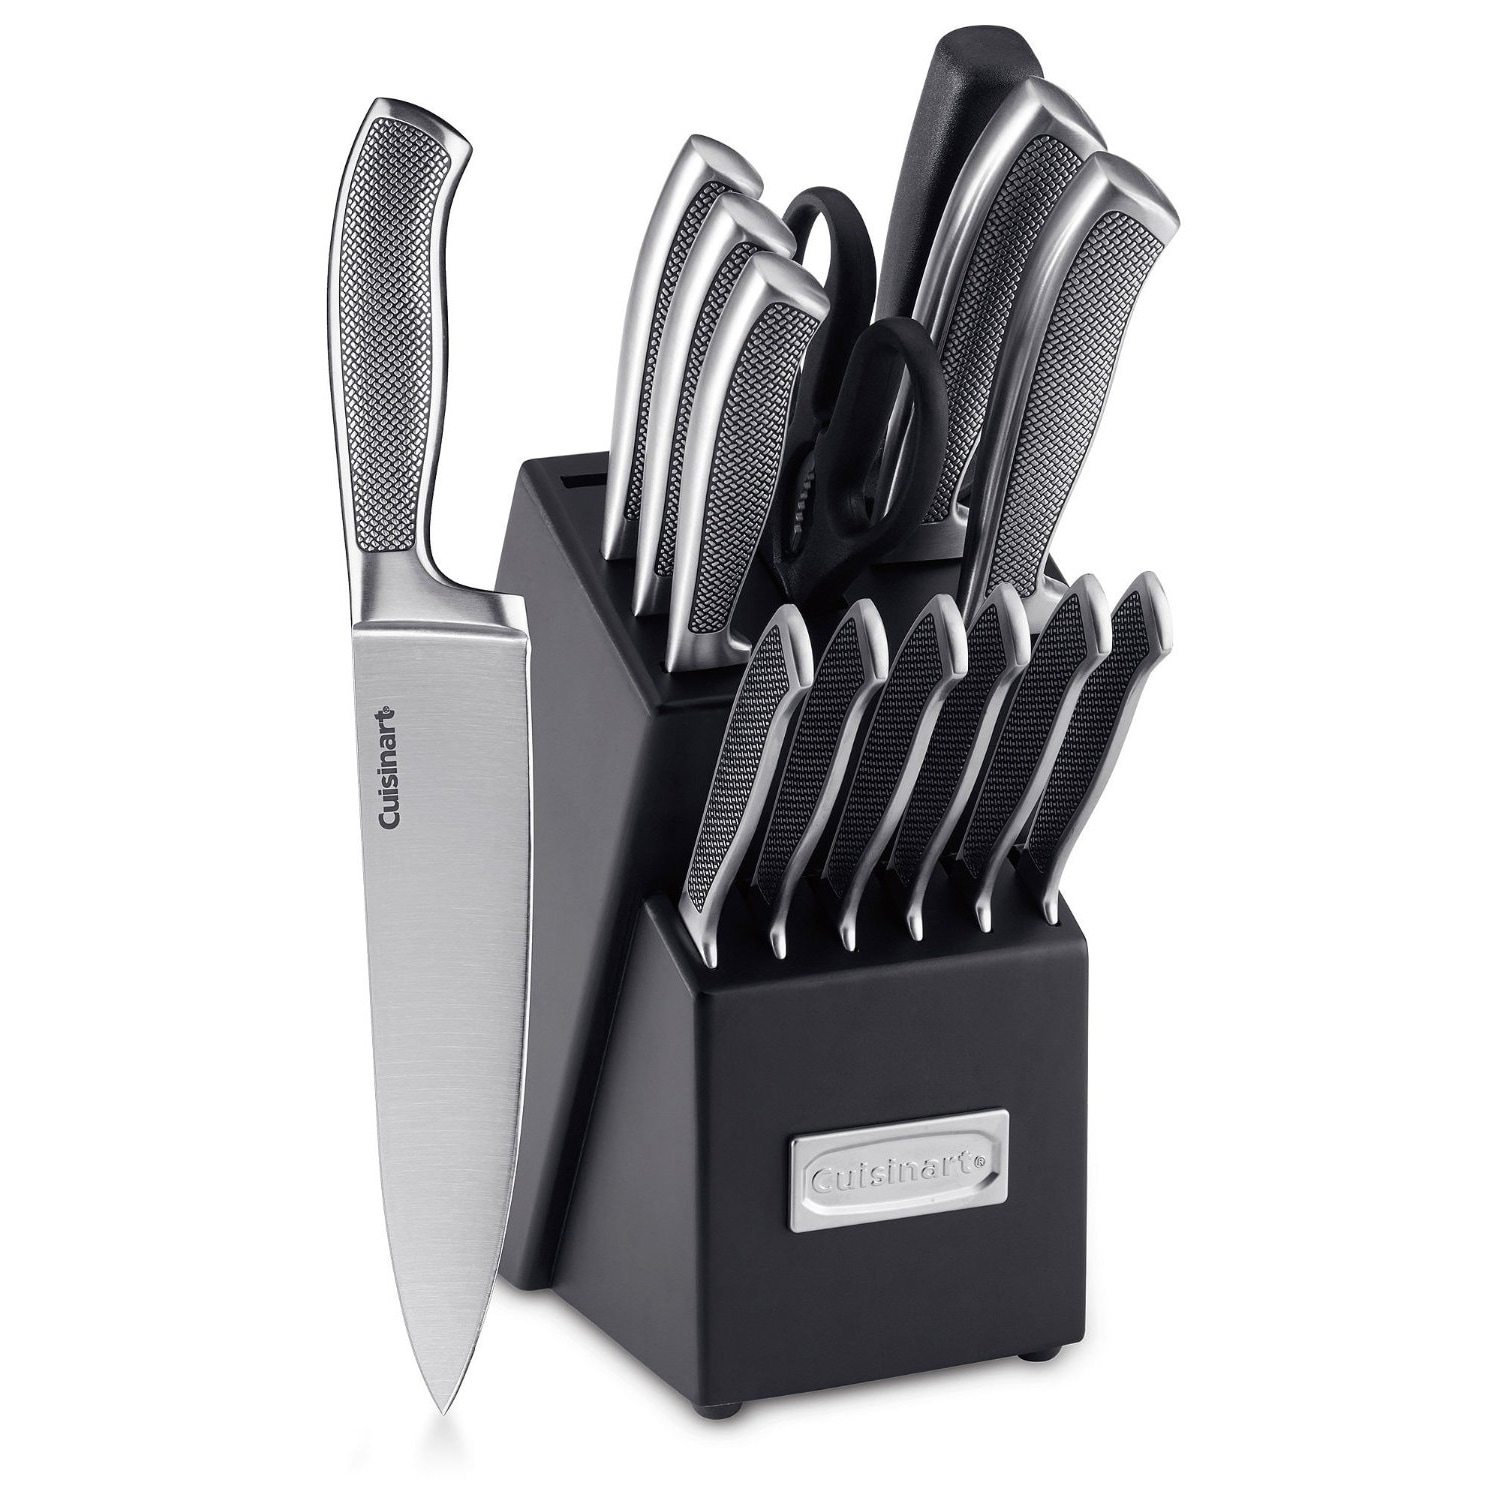 https://ak1.ostkcdn.com/images/products/9048016/Cuisinart-Classic-Graphix-Collection-15-Piece-Cutlery-Block-Set-Black-Stainless-edcb777e-6b7e-439b-8f5b-179837303f24.jpg